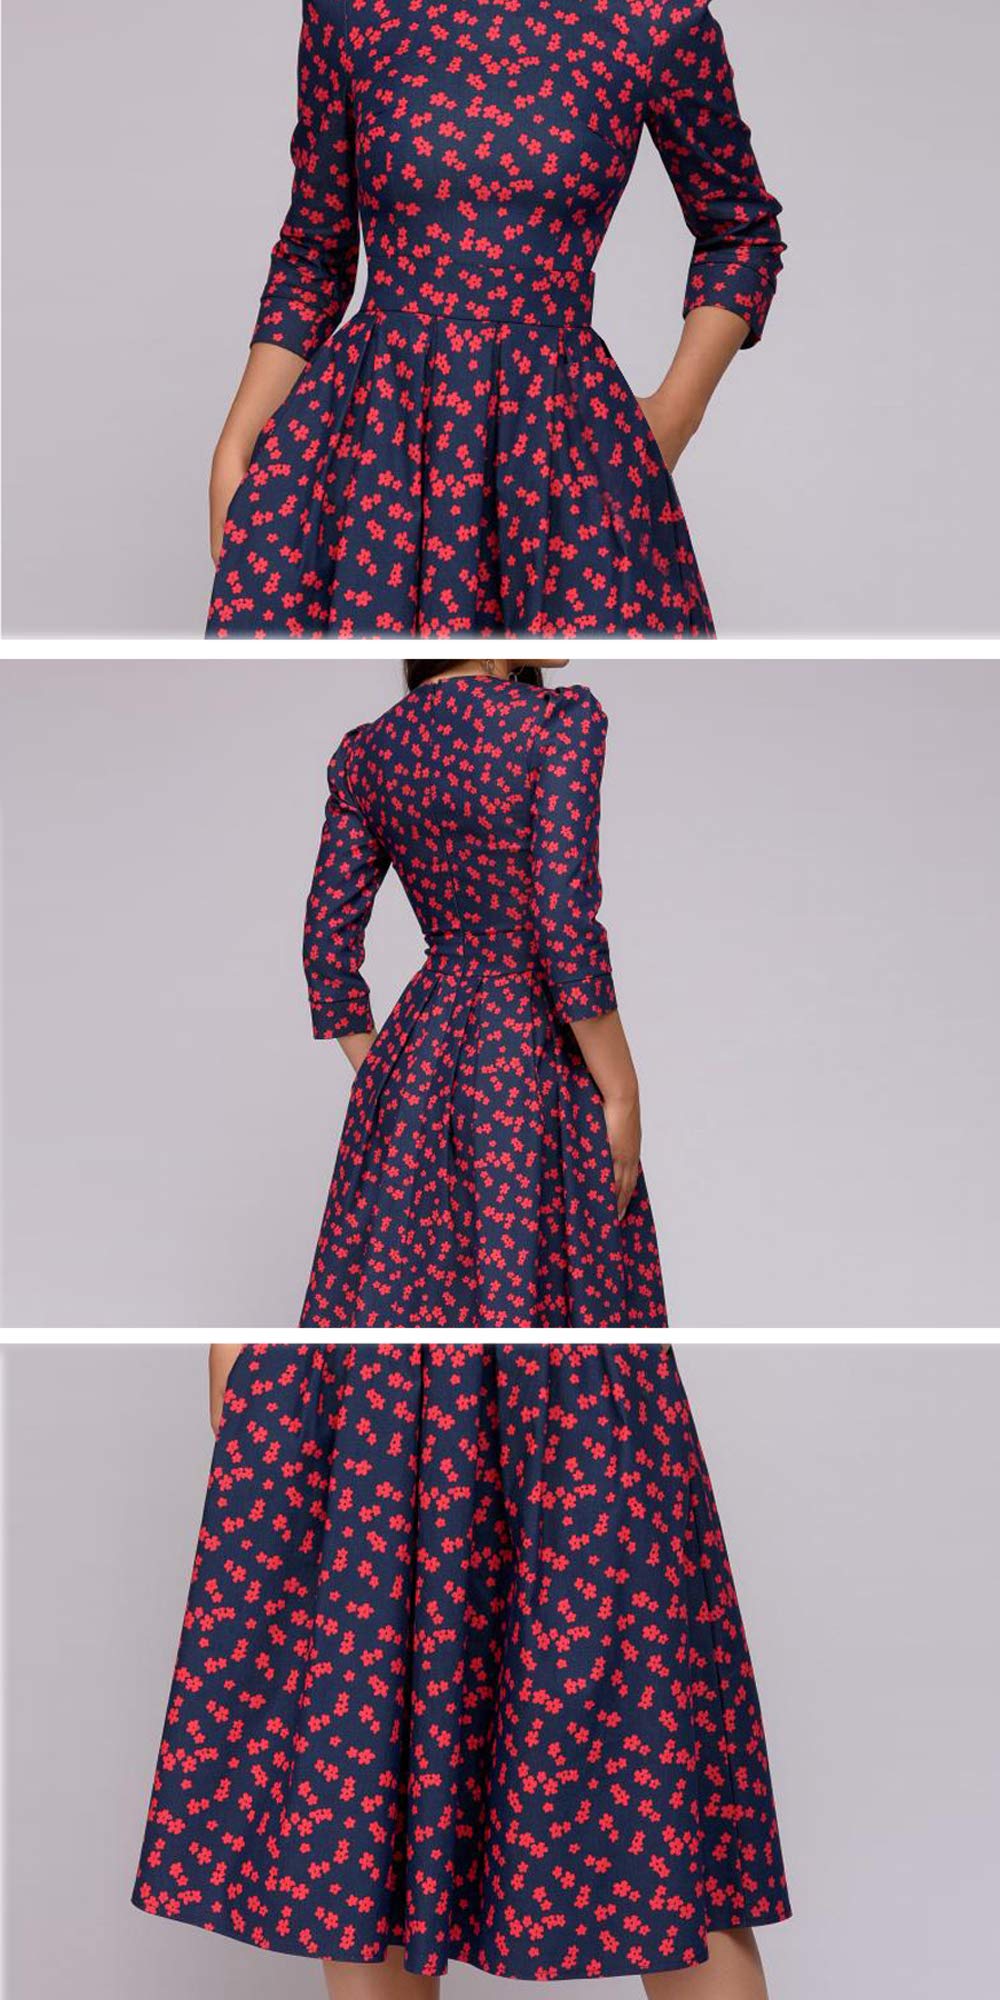 Simple Flavor Women's Floral Vintage Dress Elegant Midi Evening Dress 3/4 Sleeves